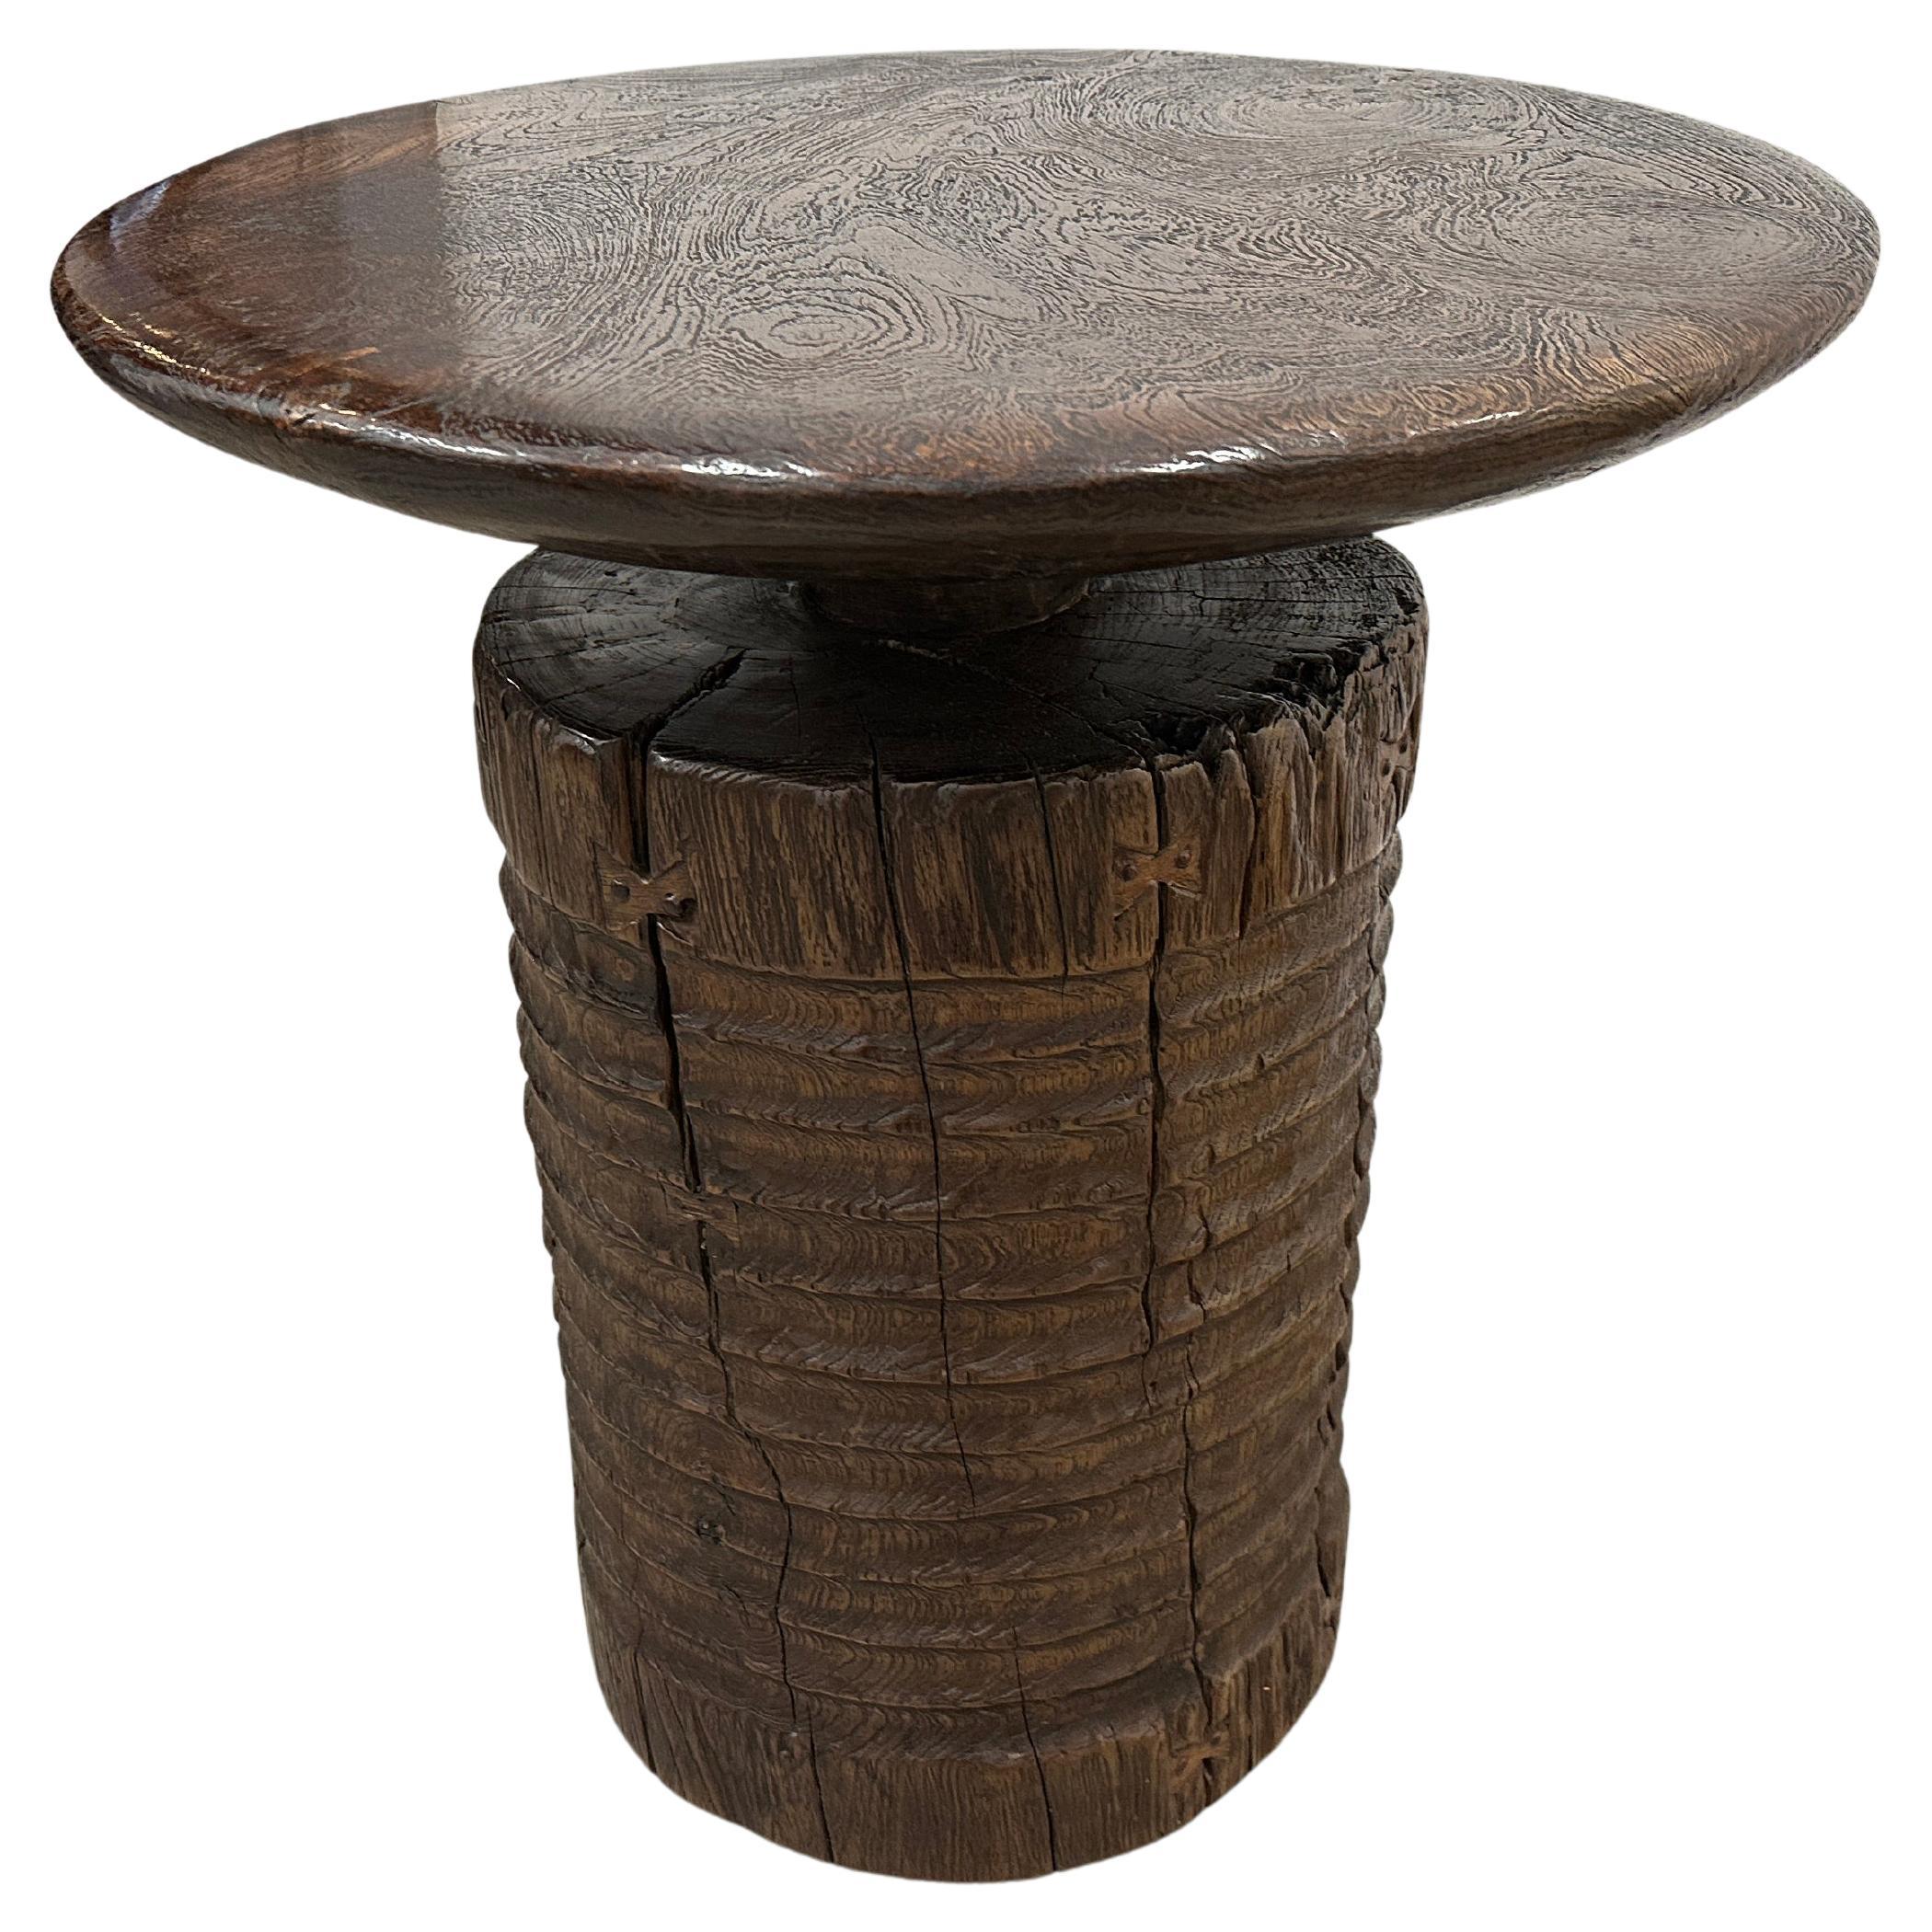 Andrianna Shamaris Impressive Century Old Teak Wood Side Table or Entry Table